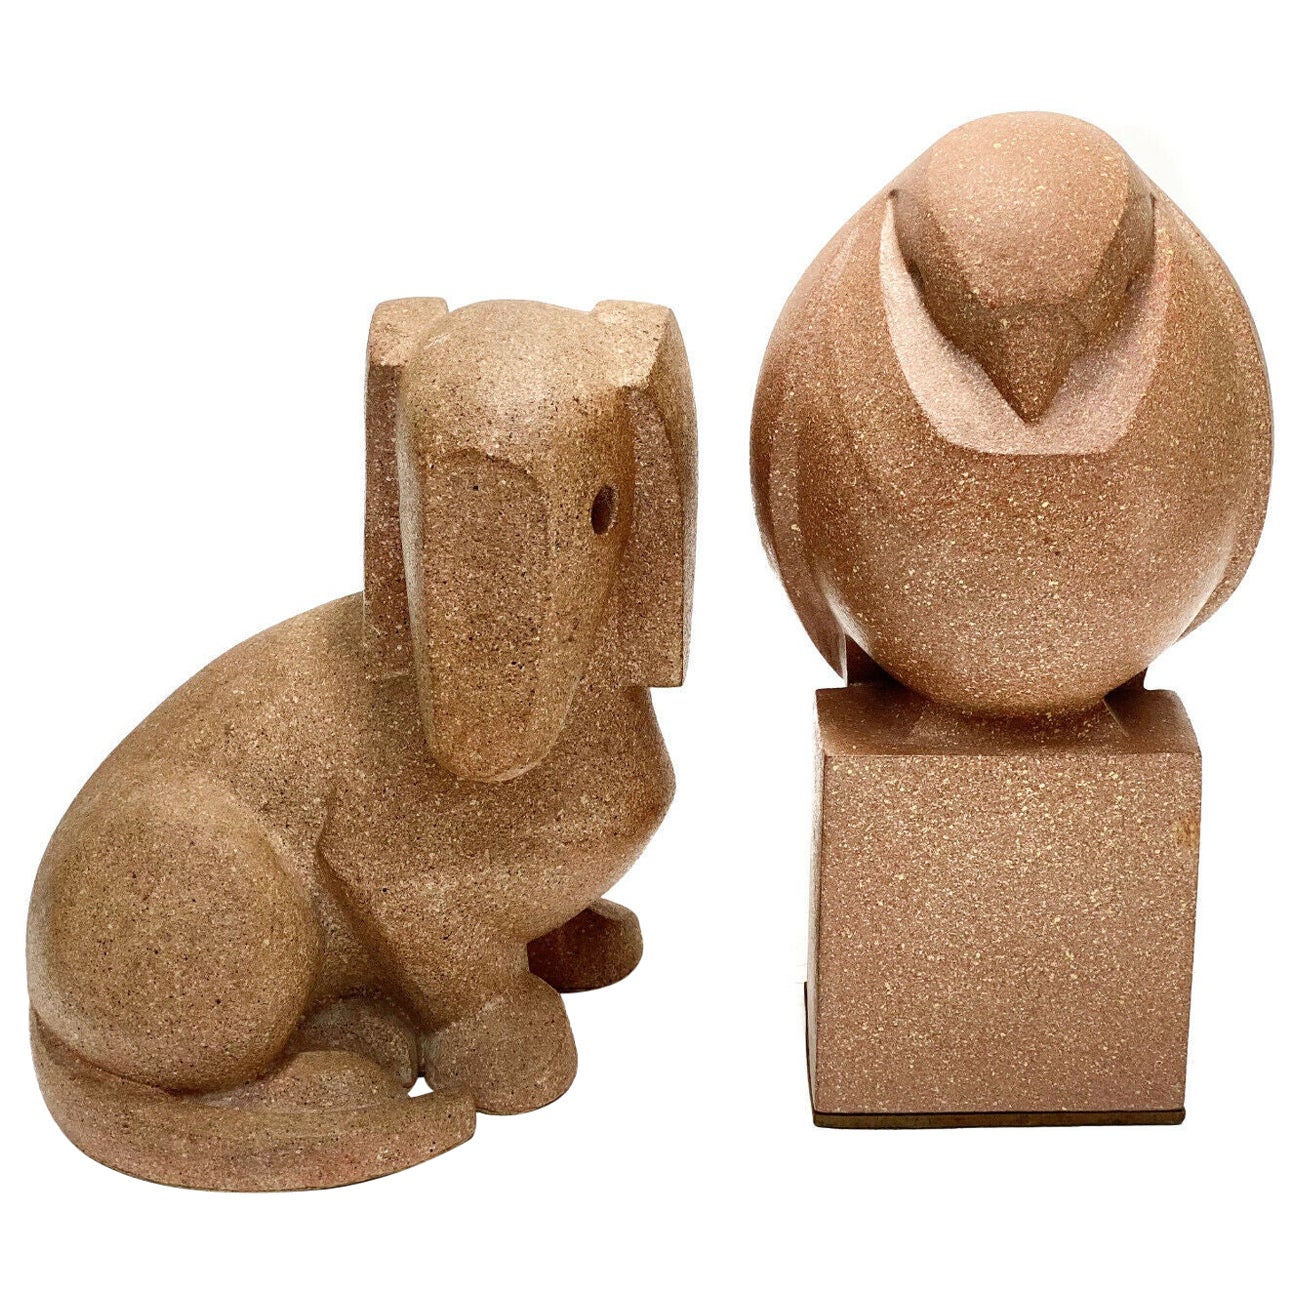 Ceramic Dog & Owl Figurines, Signed, by Mimi Murphey